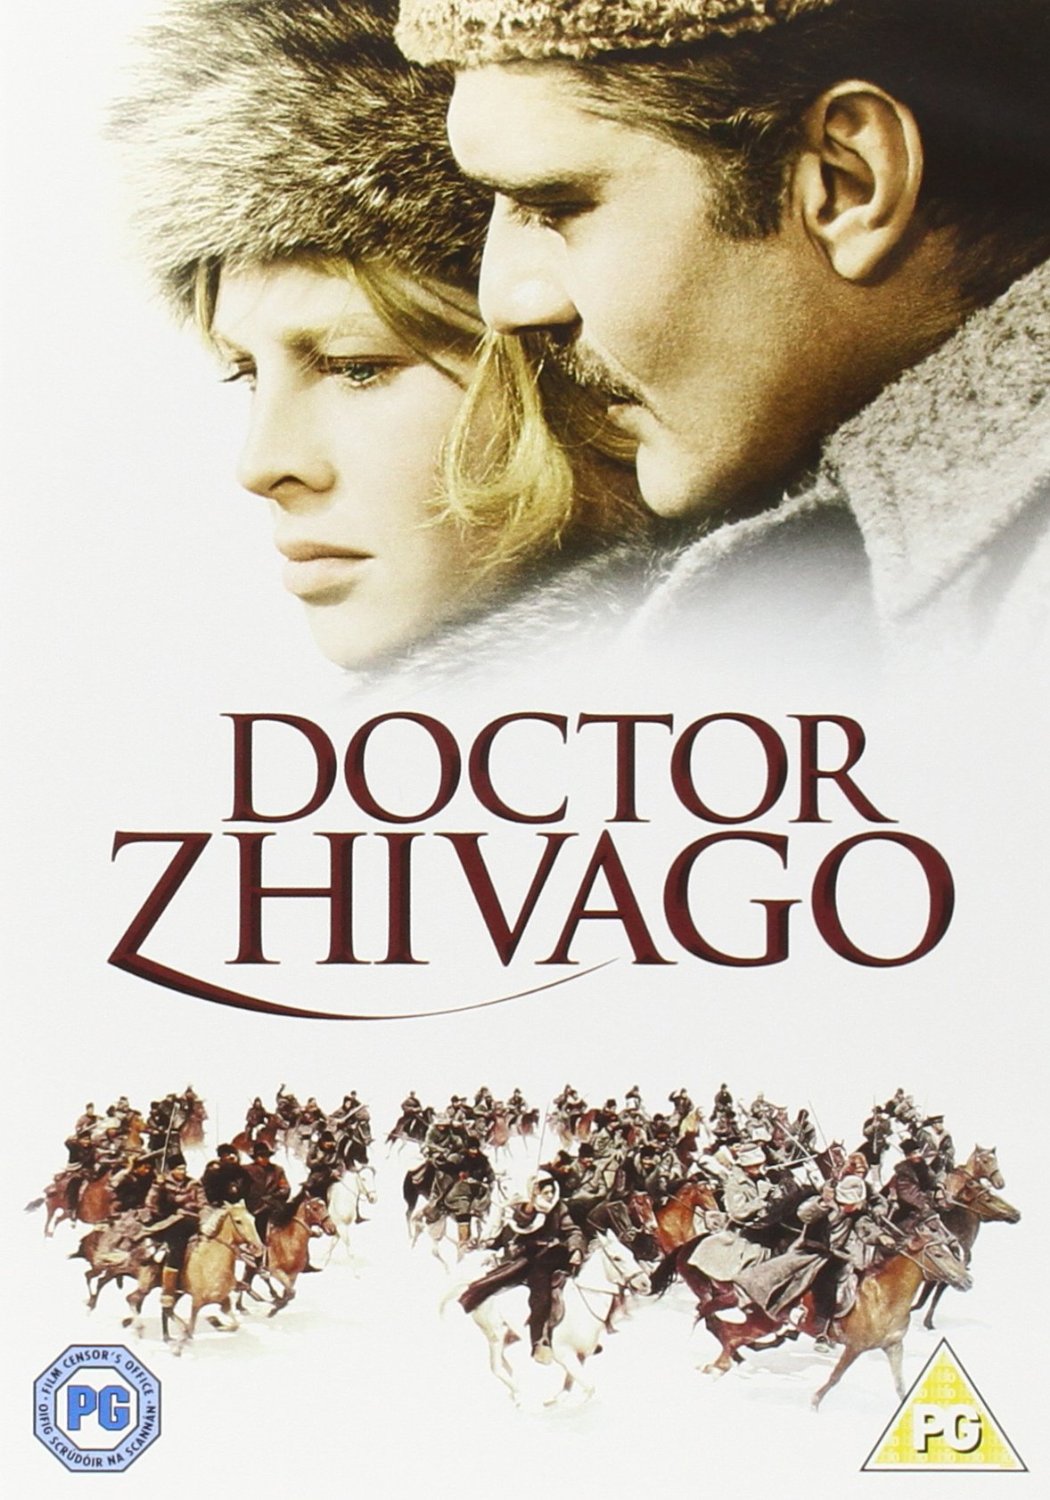 Omar Sharif and Julie Christie in Doctor Zhivago, 1965 (-3)